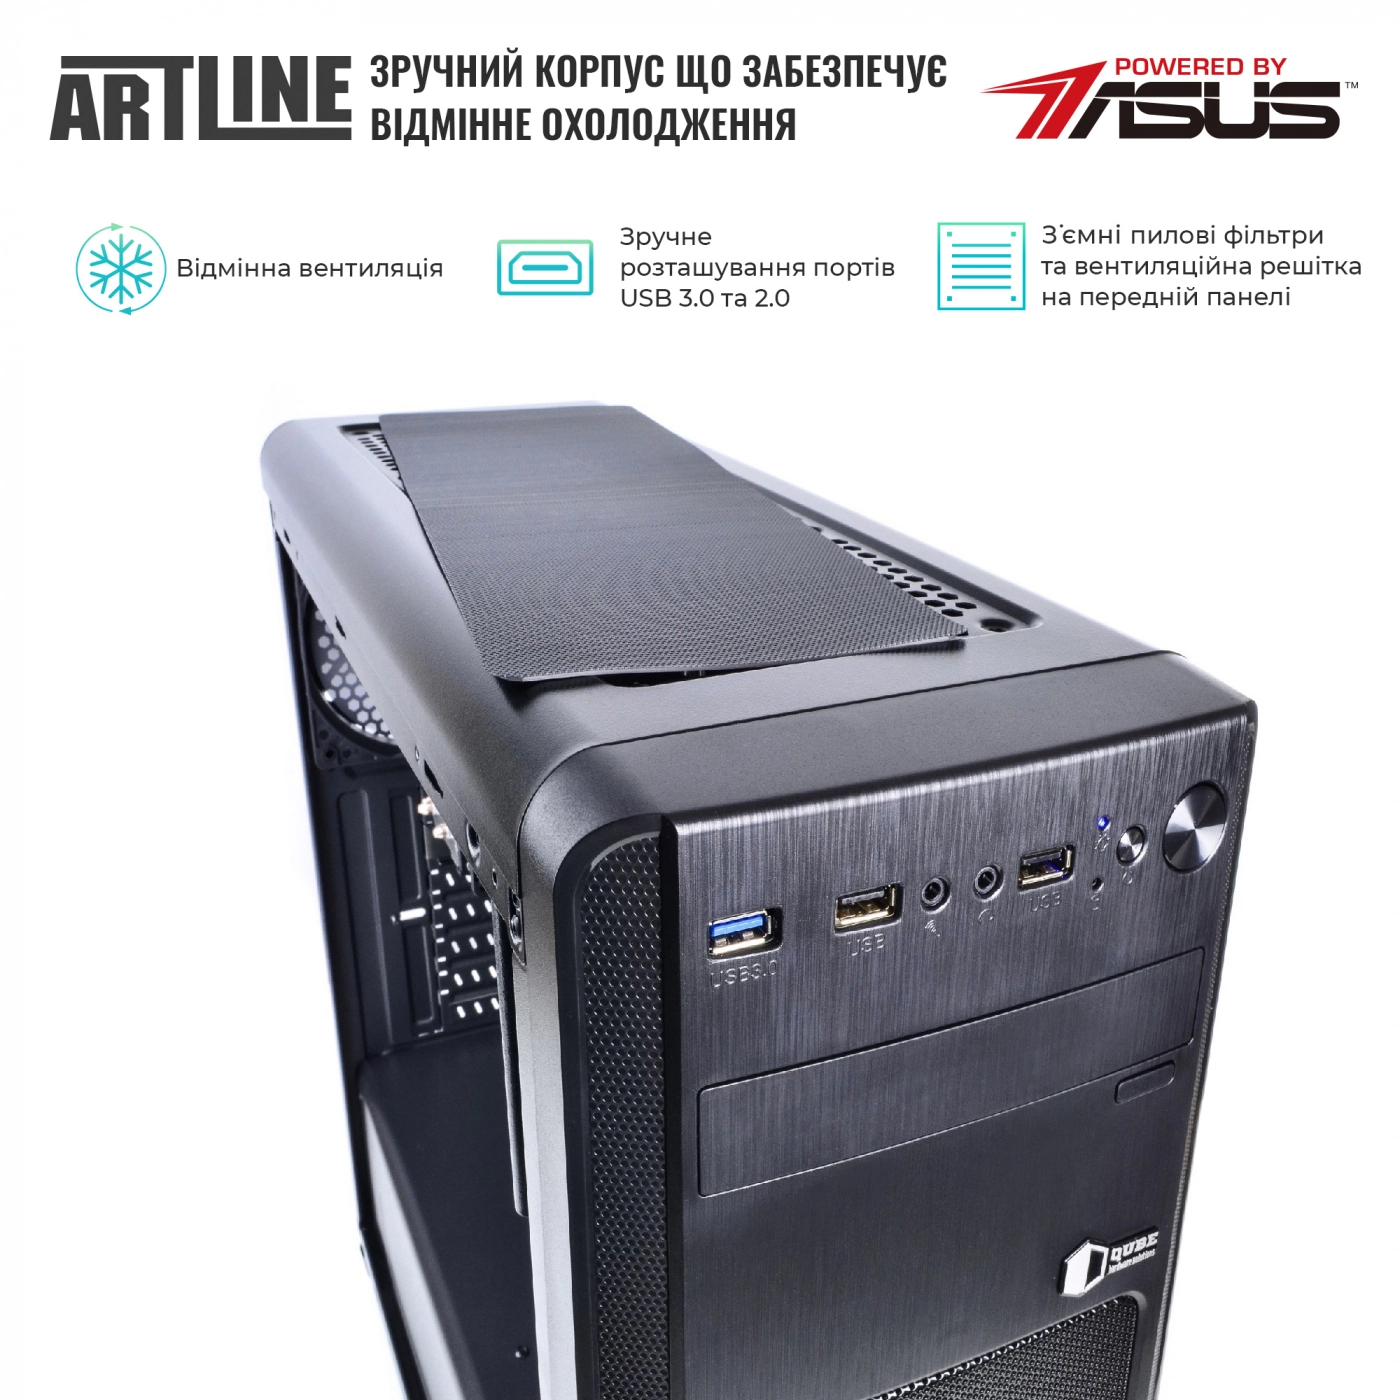 Купити Сервер ARTLINE Business T15v18 - фото 2